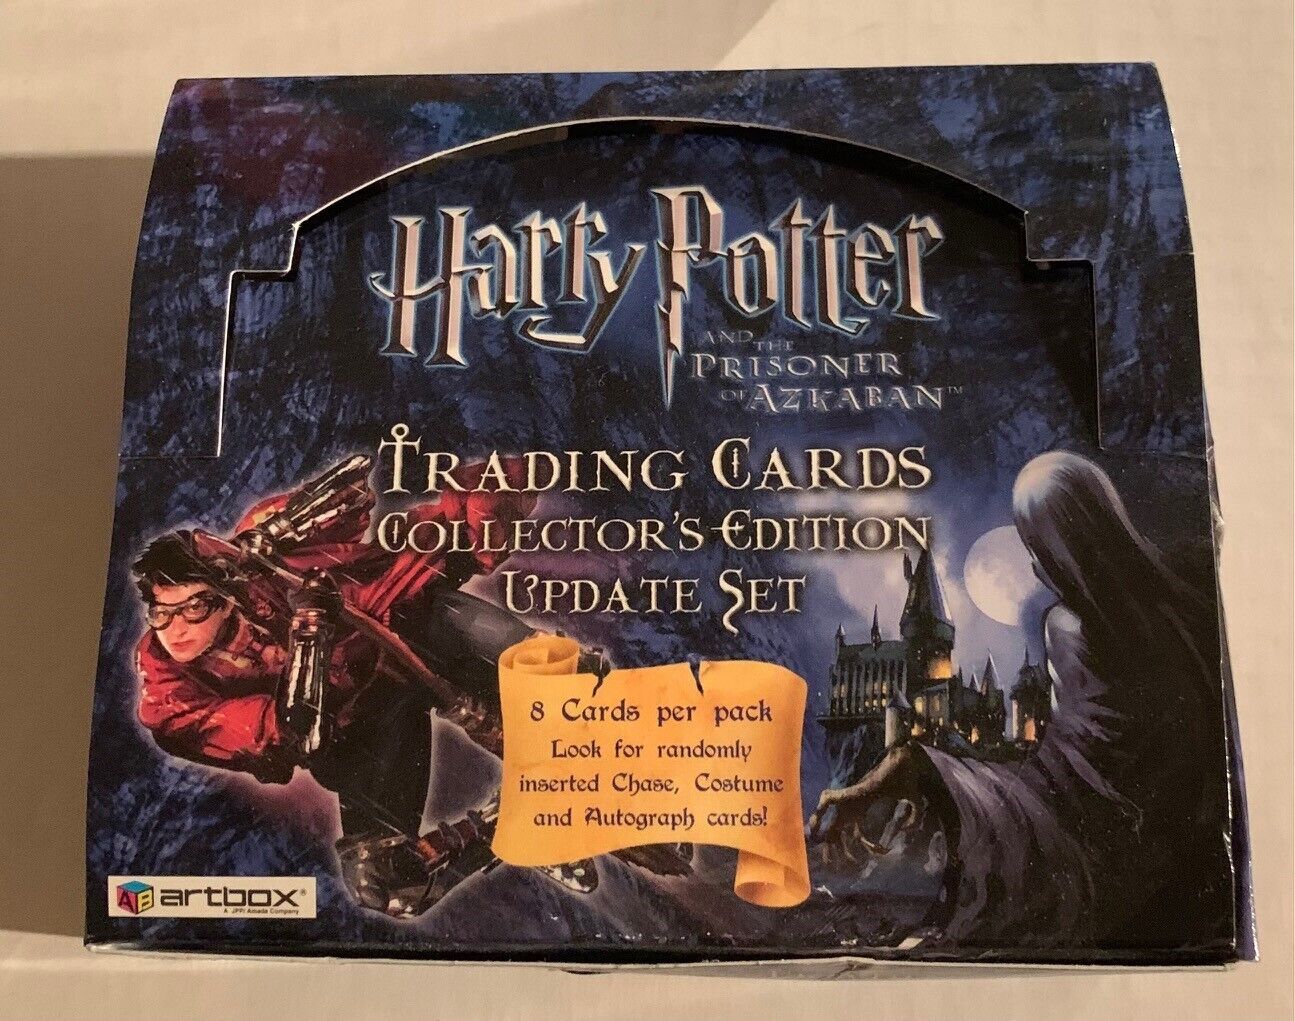 Artbox Harry Potter & the Prisoner of Azkaban Update opened box & trading cards